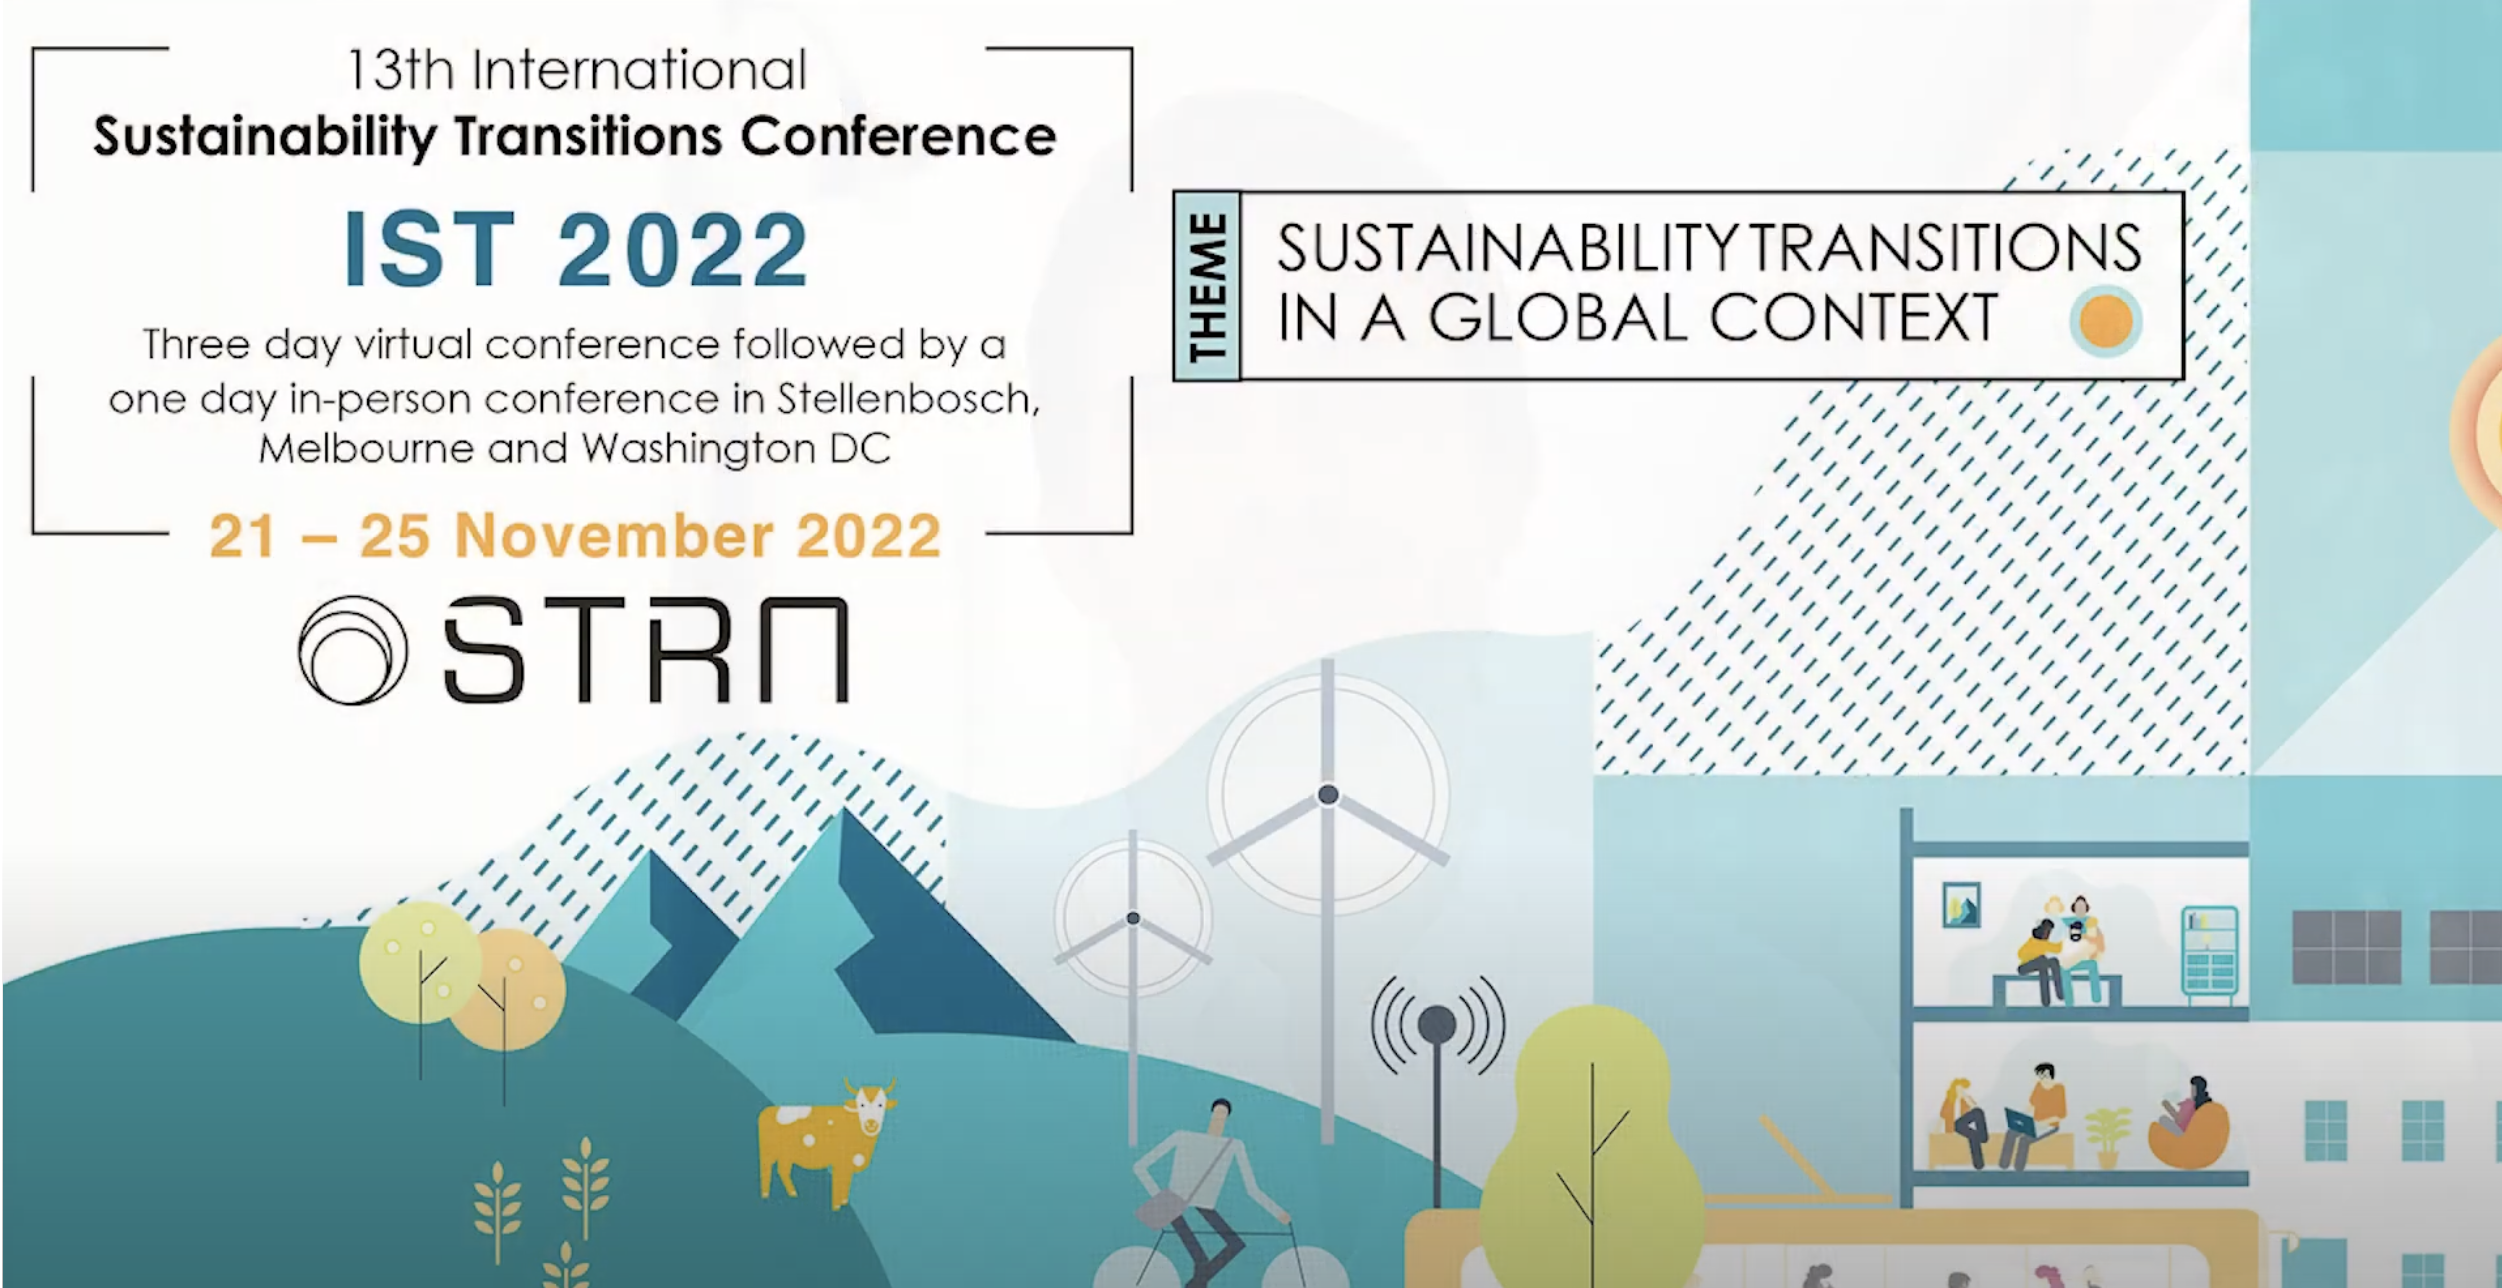 13th International Sustainability Transitions Conference Regional Hub – Keynote by Chantal Naidoo